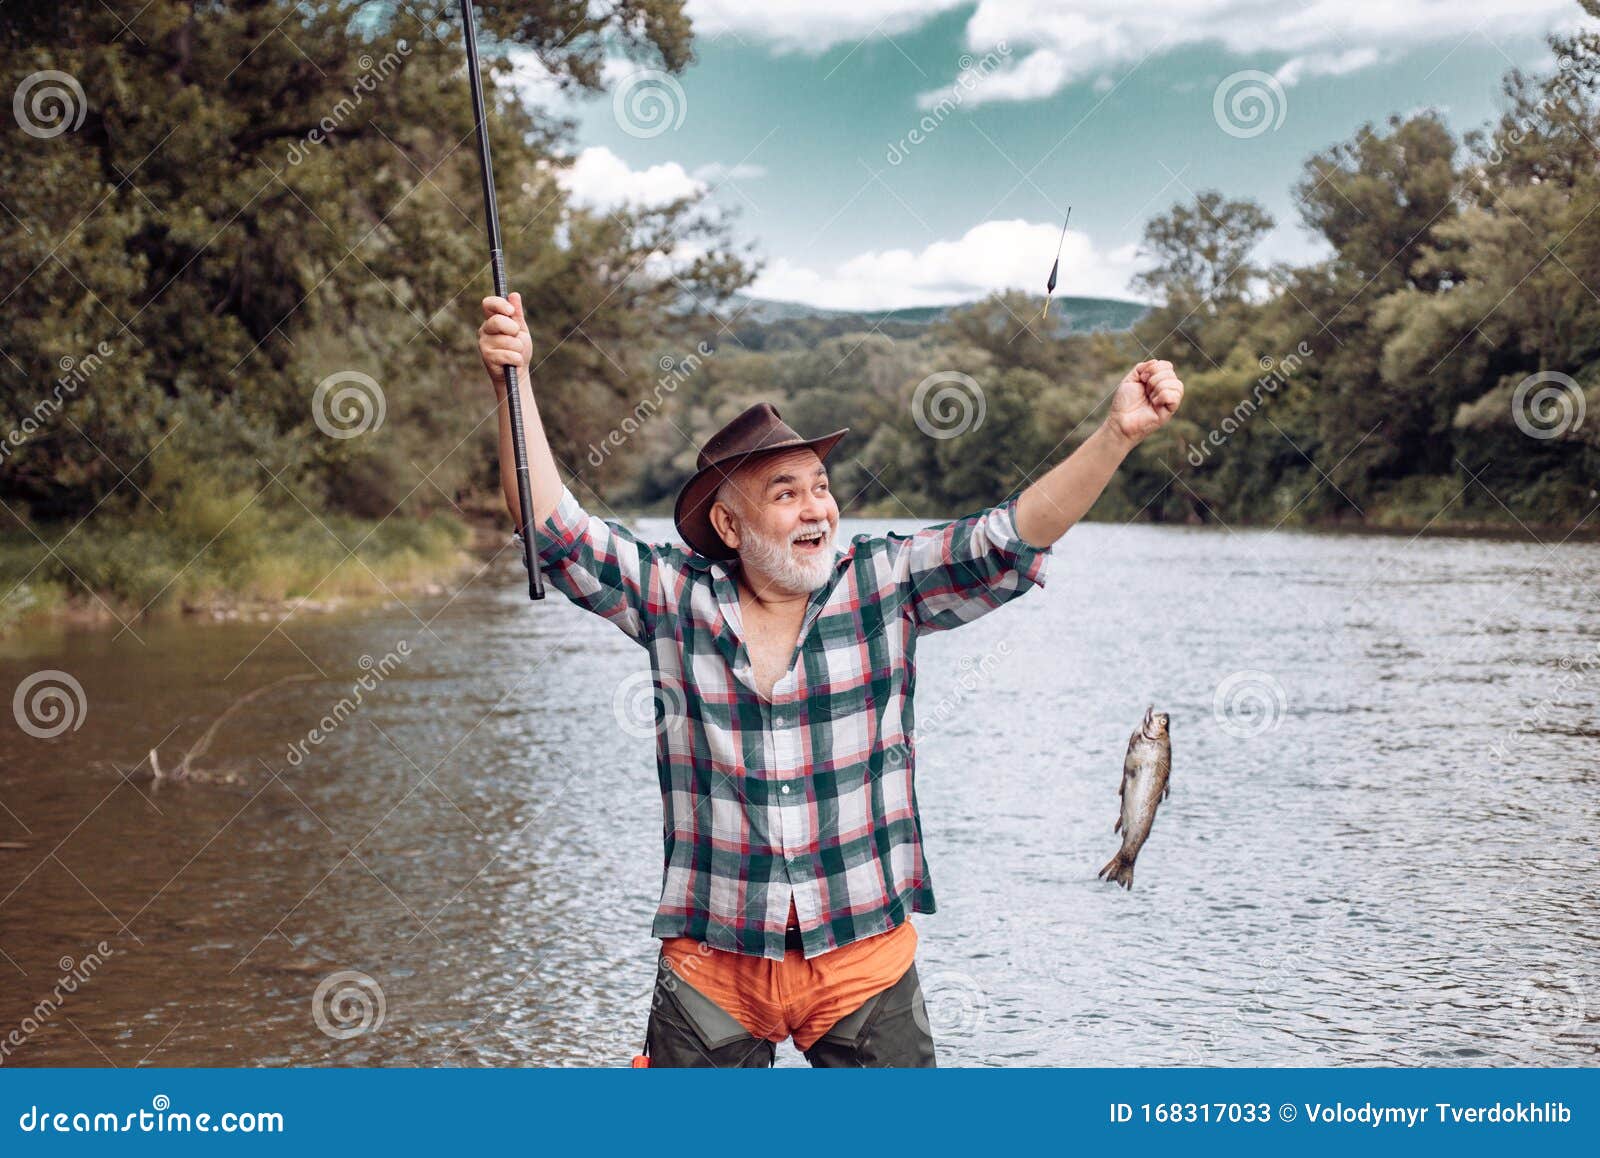 https://thumbs.dreamstime.com/z/elegant-bearded-man-fishing-catching-fishing-hunting-perfect-weekend-just-do-fishing-freshwater-lake-elegant-bearded-168317033.jpg